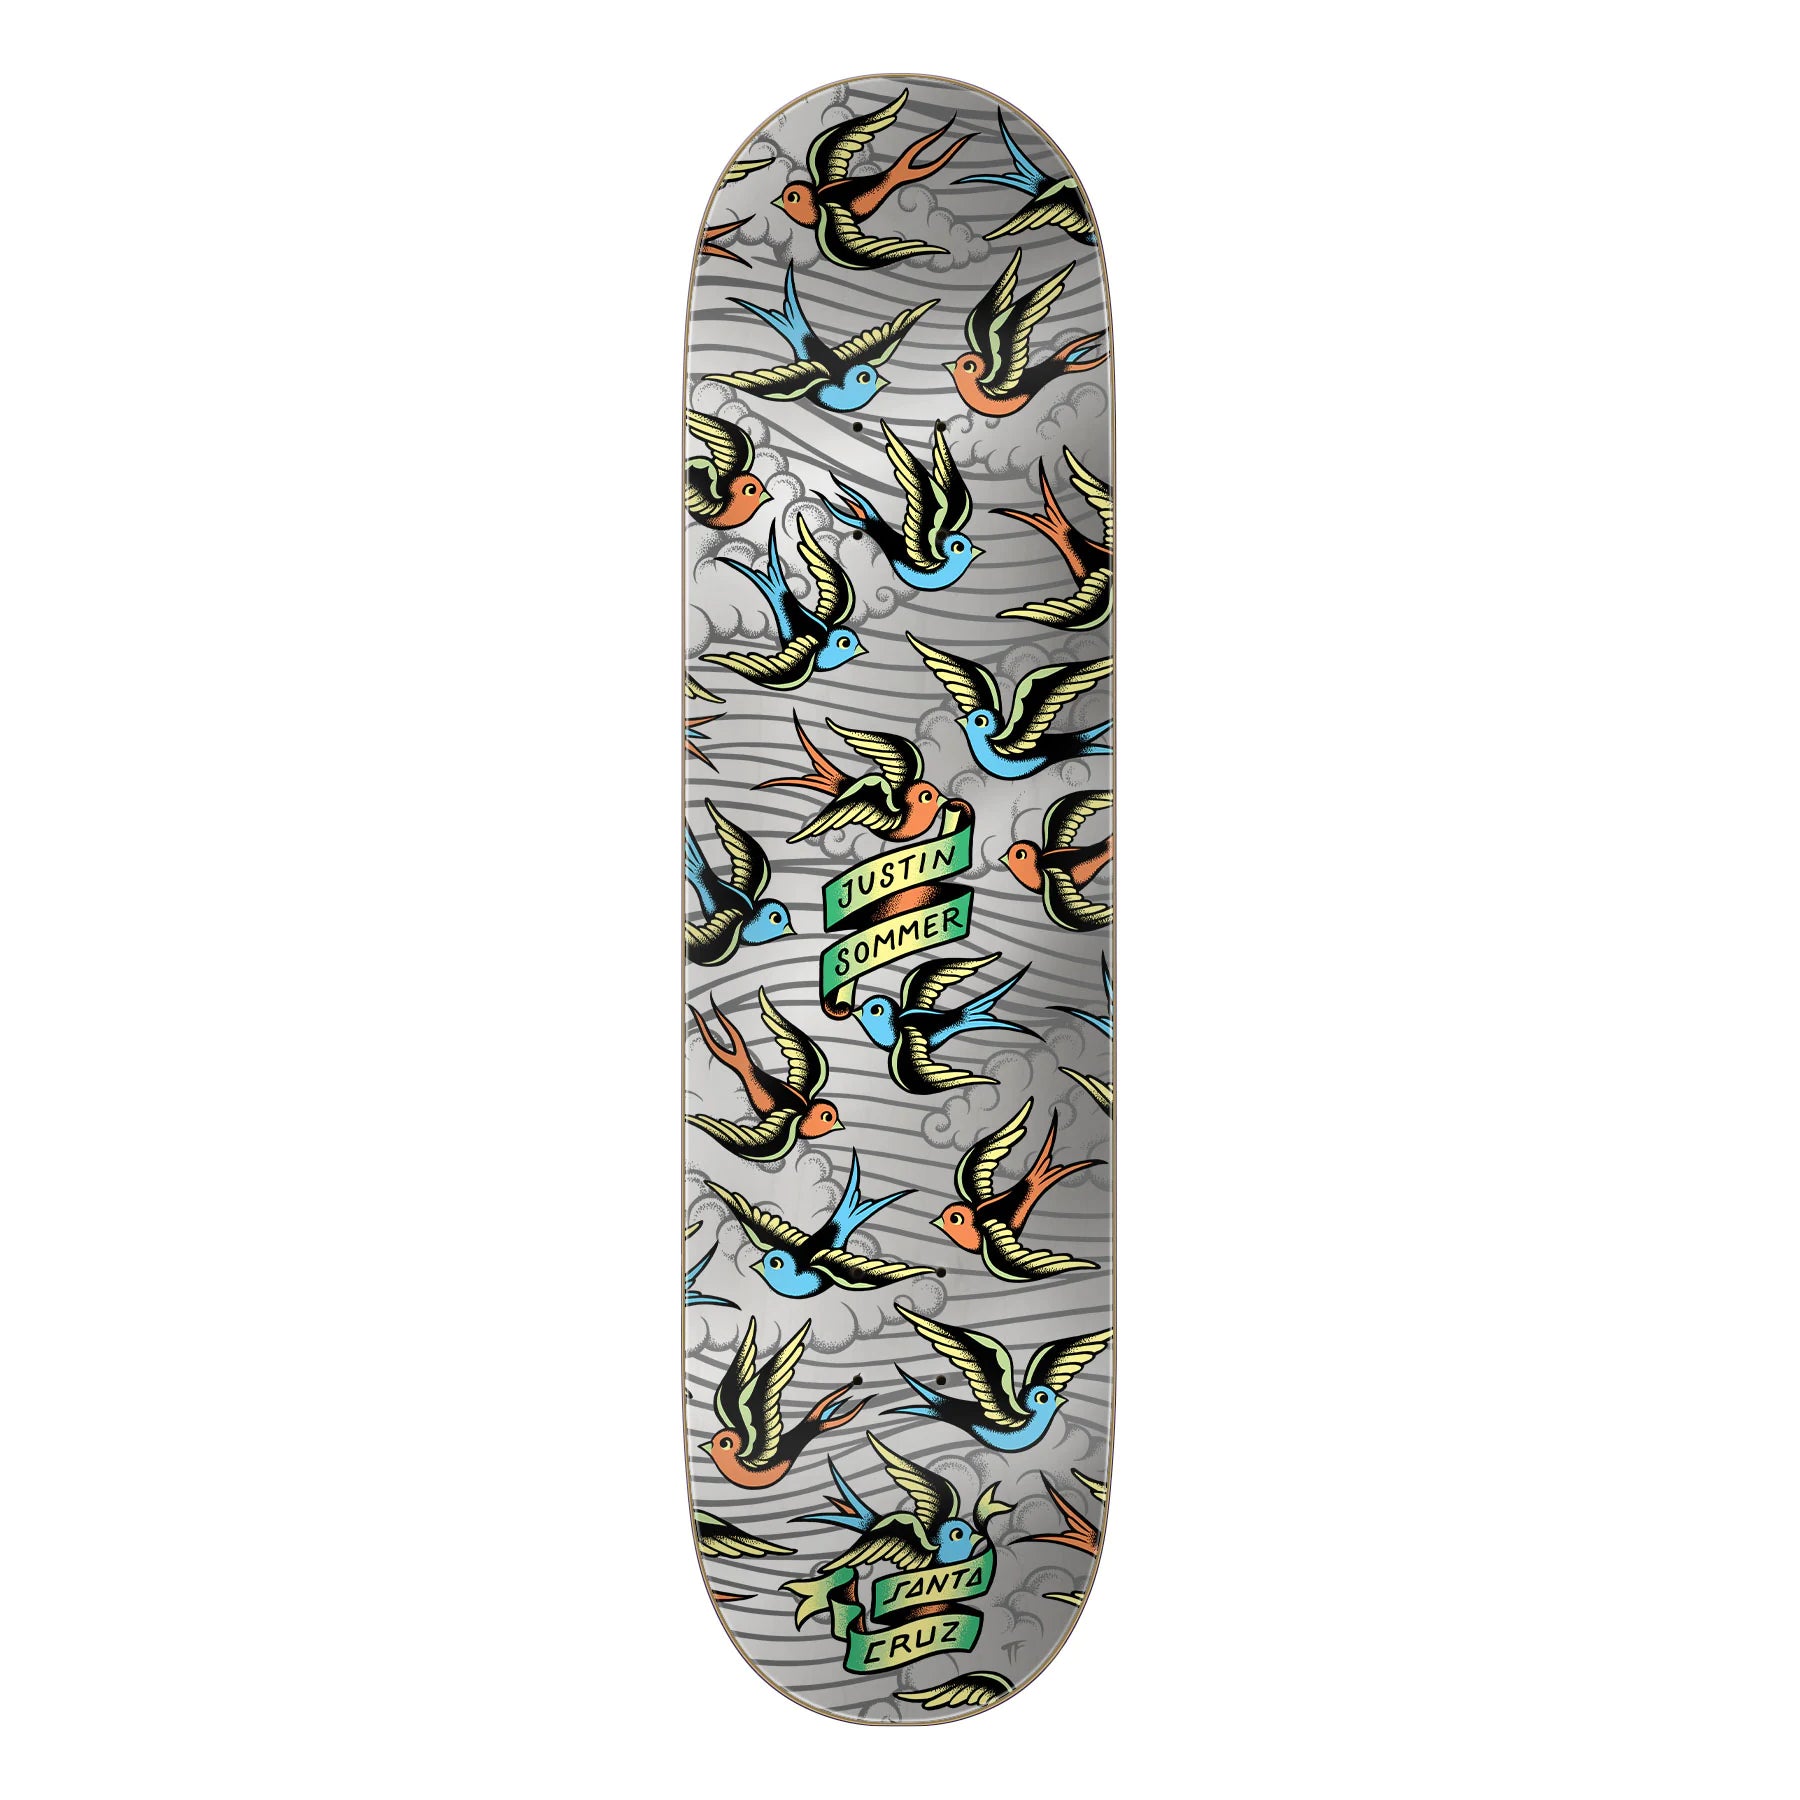 Justin Sommer Sparrows Santa Cruz Skateboard Deck